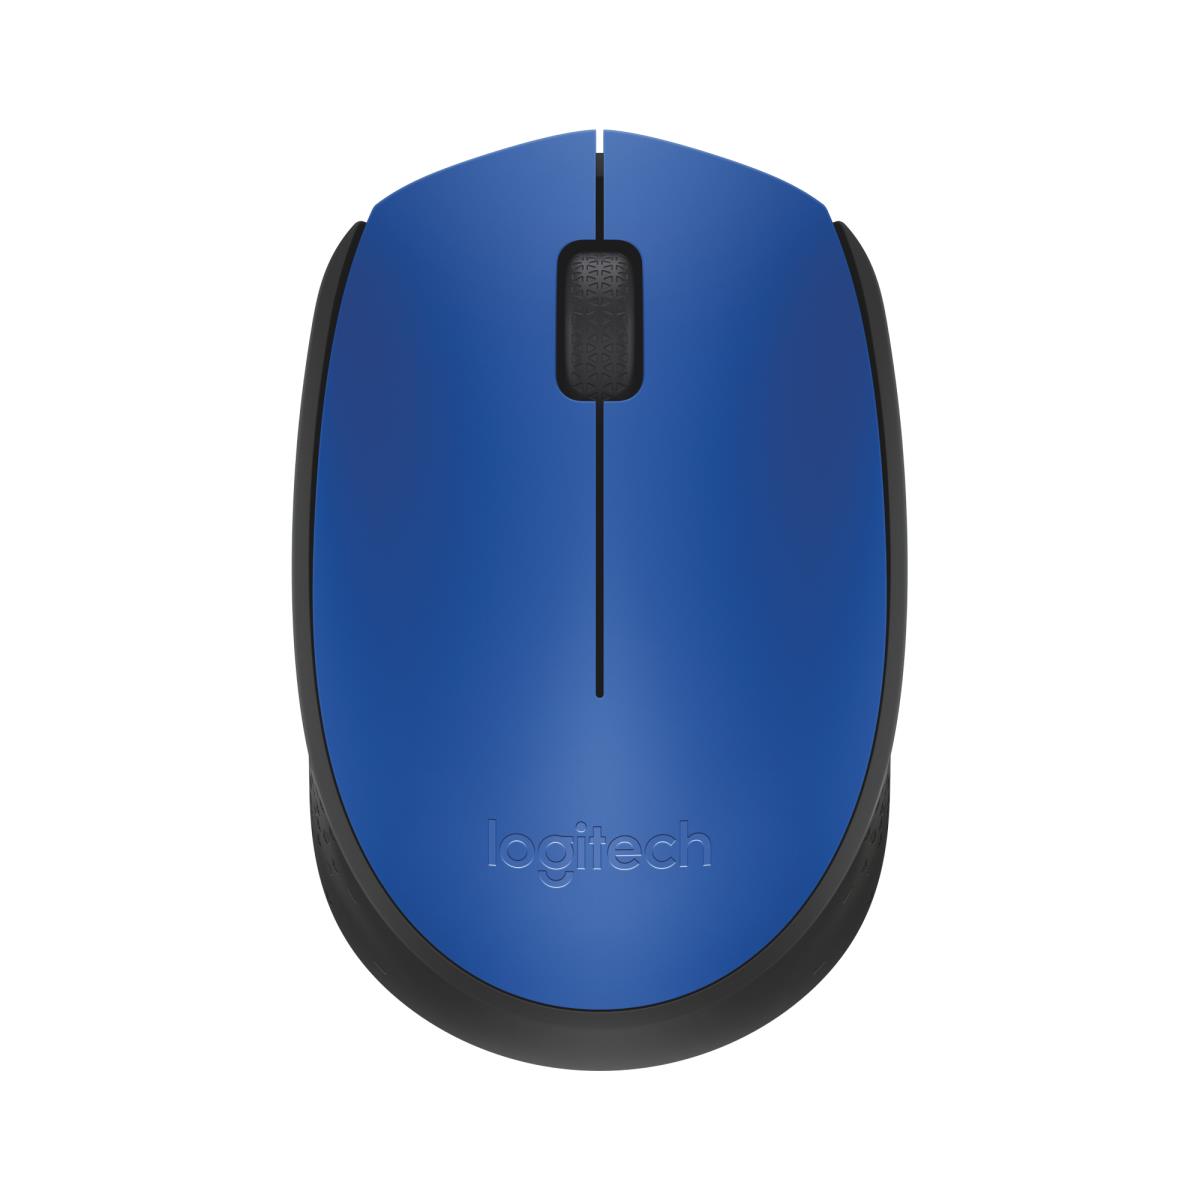 Logitech Wireless Mouse M171 - BLUE